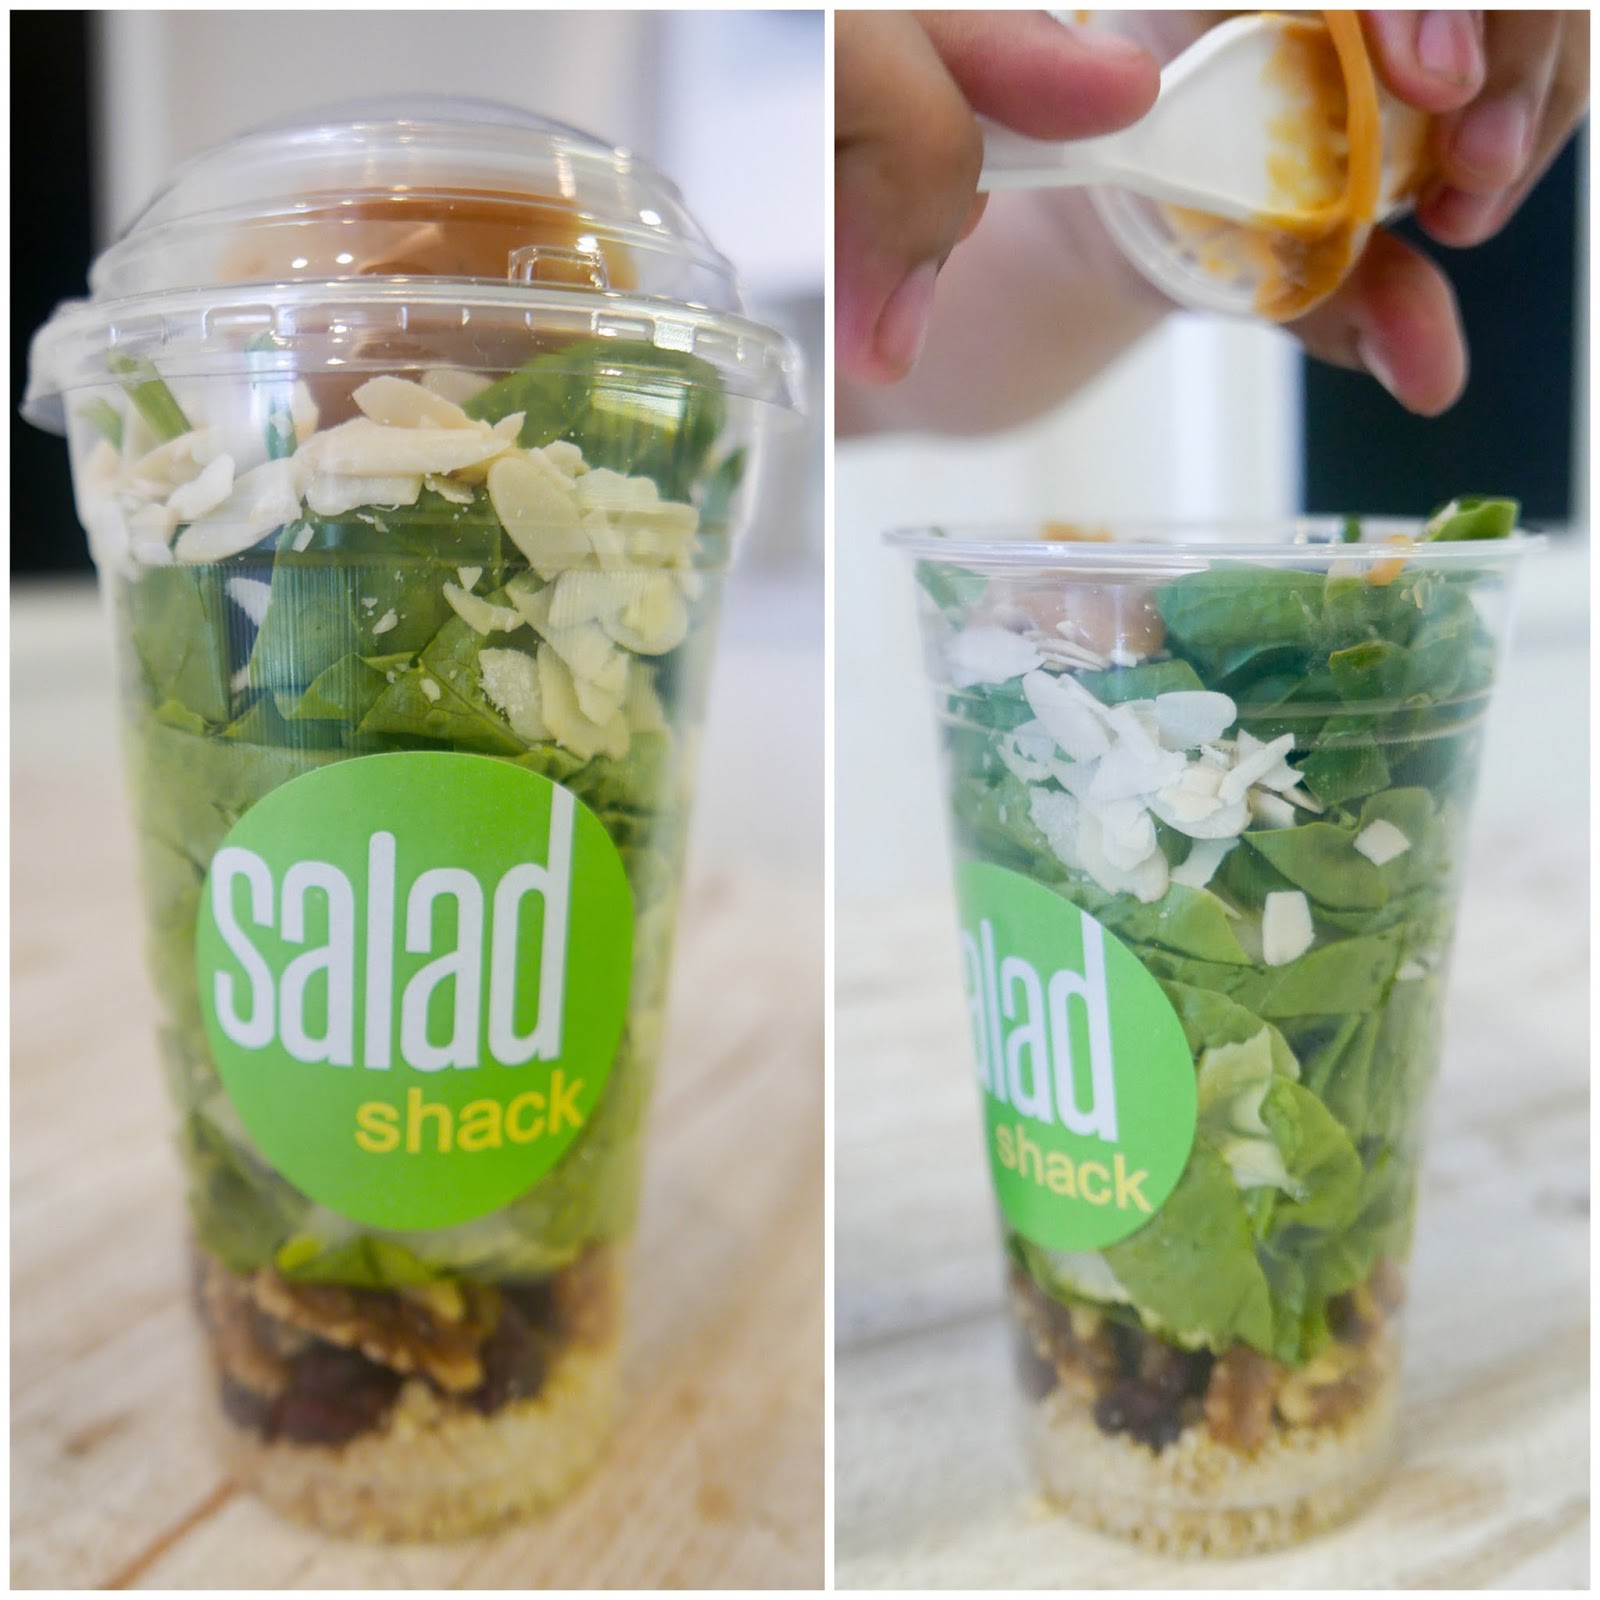 2. Salad Shack